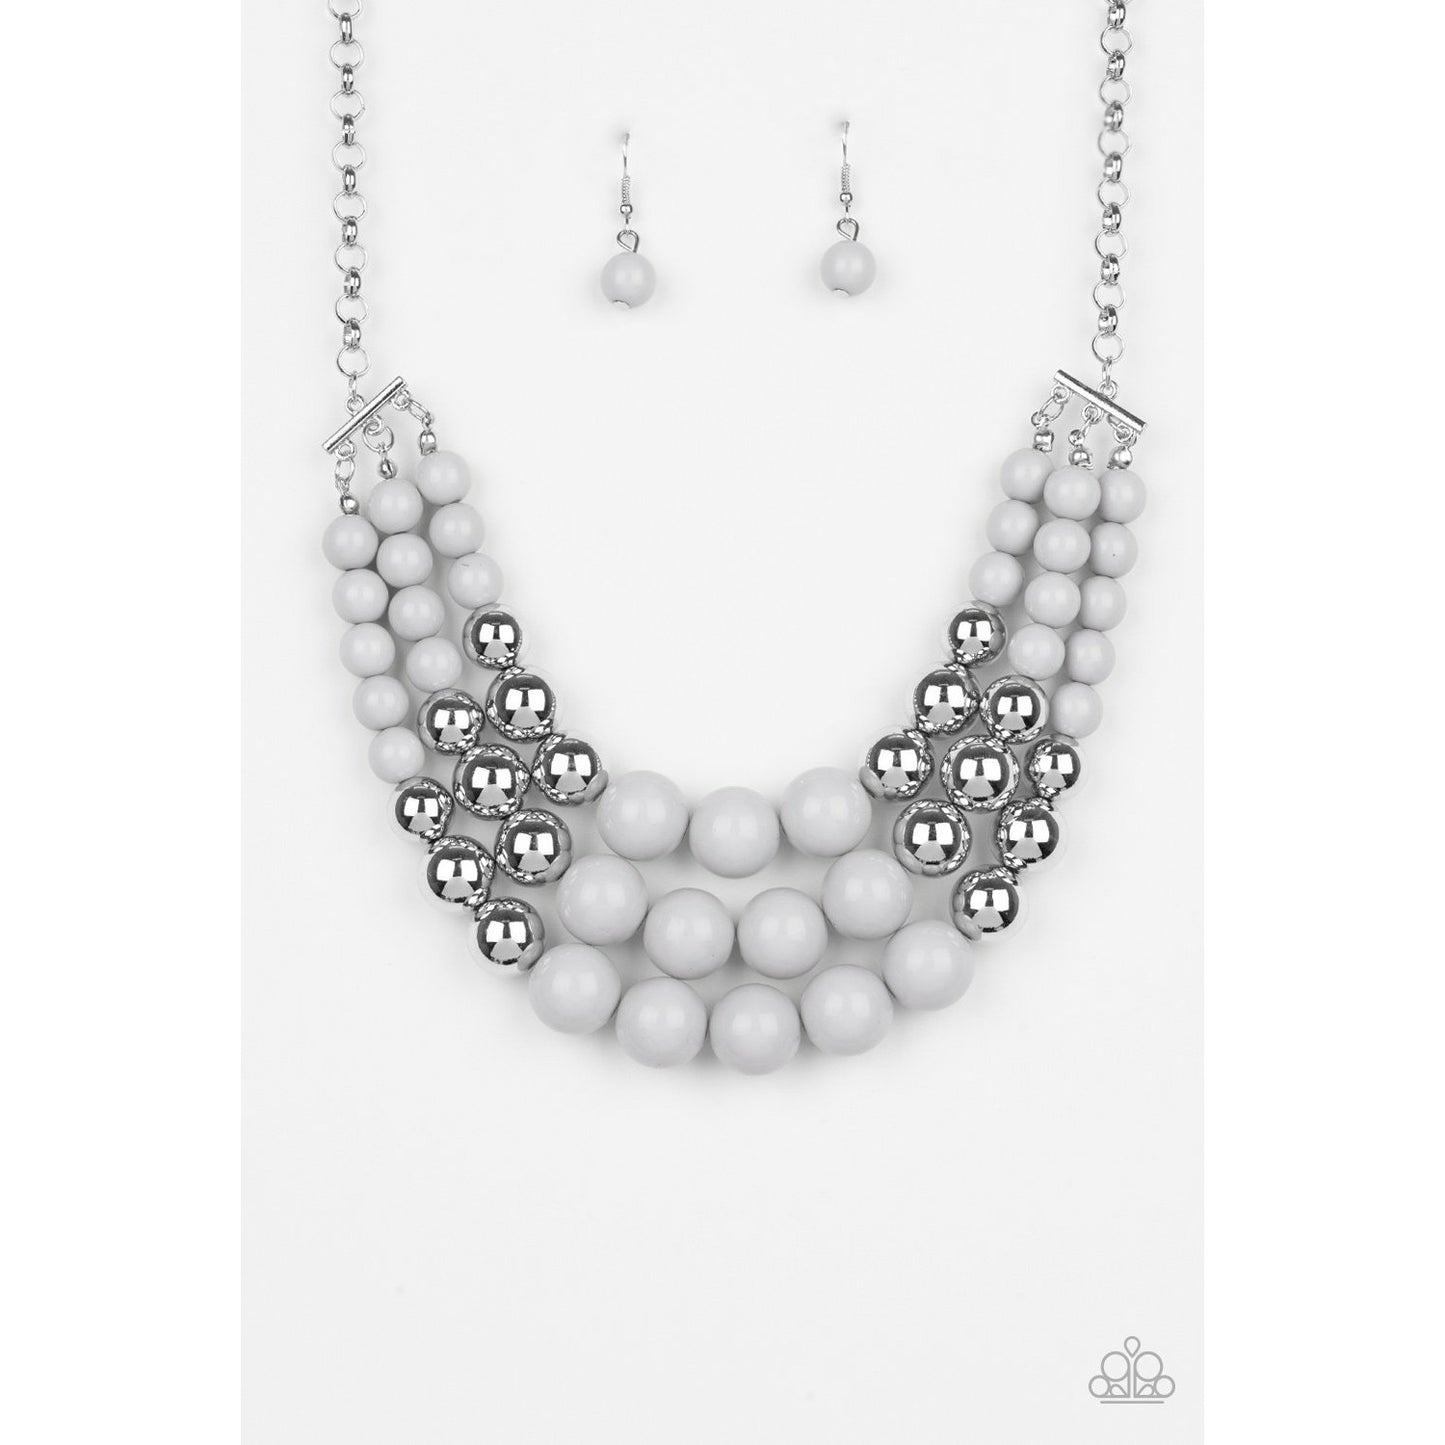 Dream Pop - Silver necklace